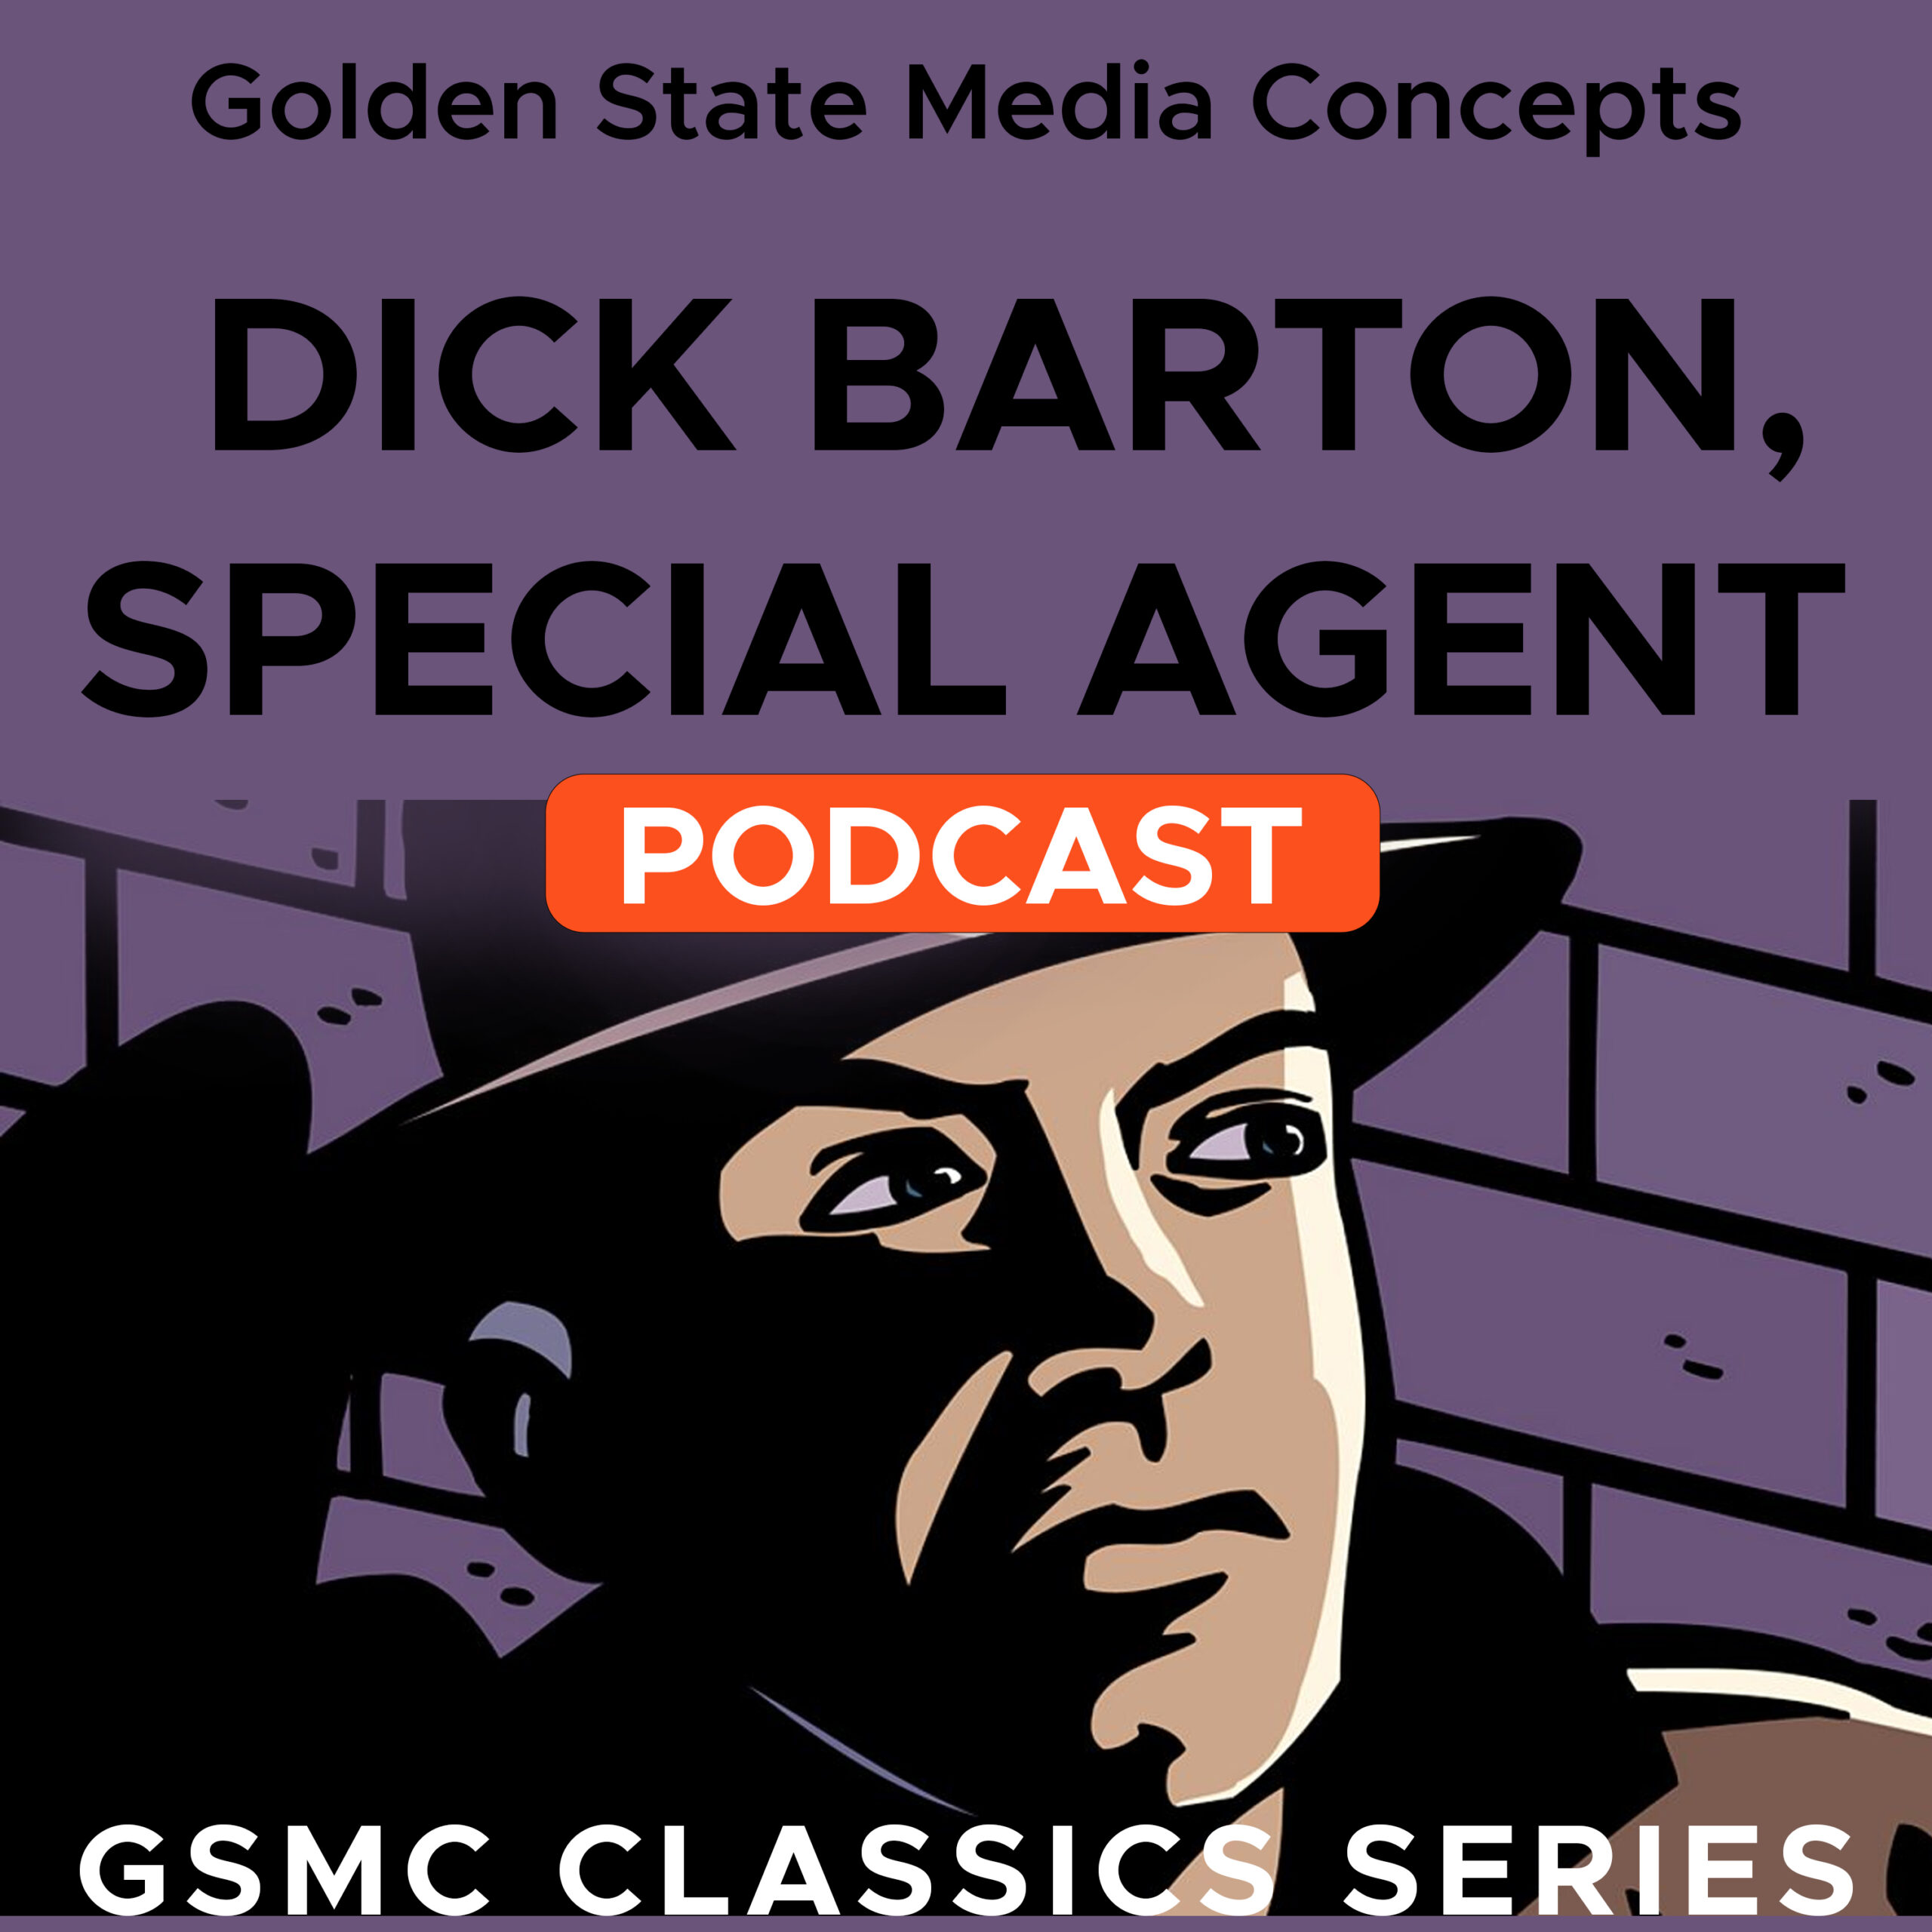 Dick Barton, Special Agent